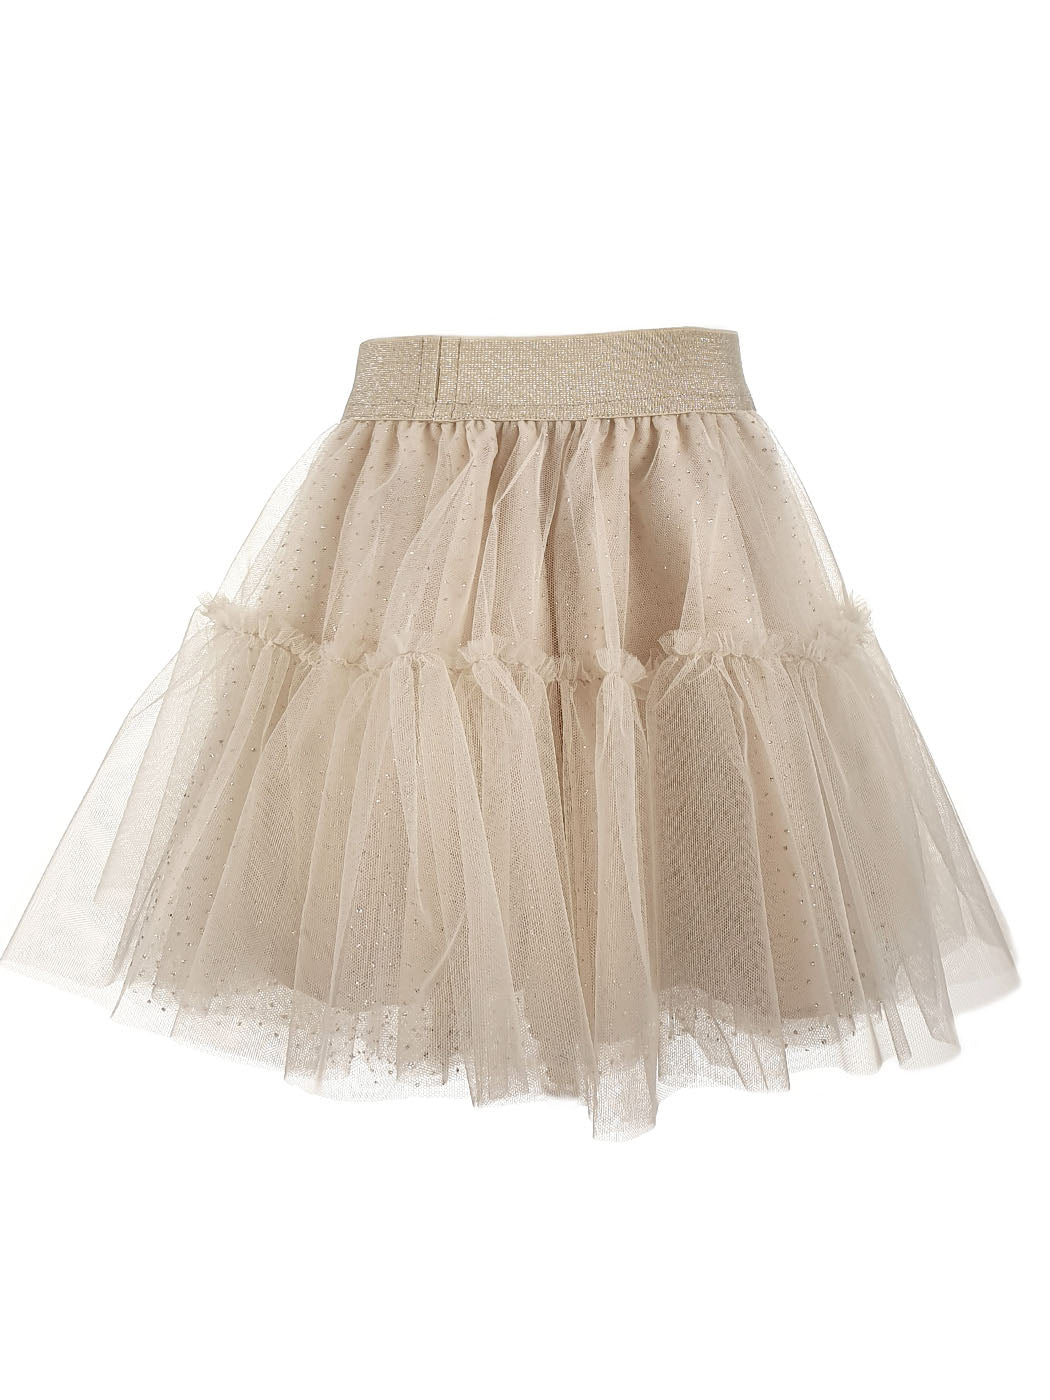 Tutu tulle skirt with ruffles - BROOKE